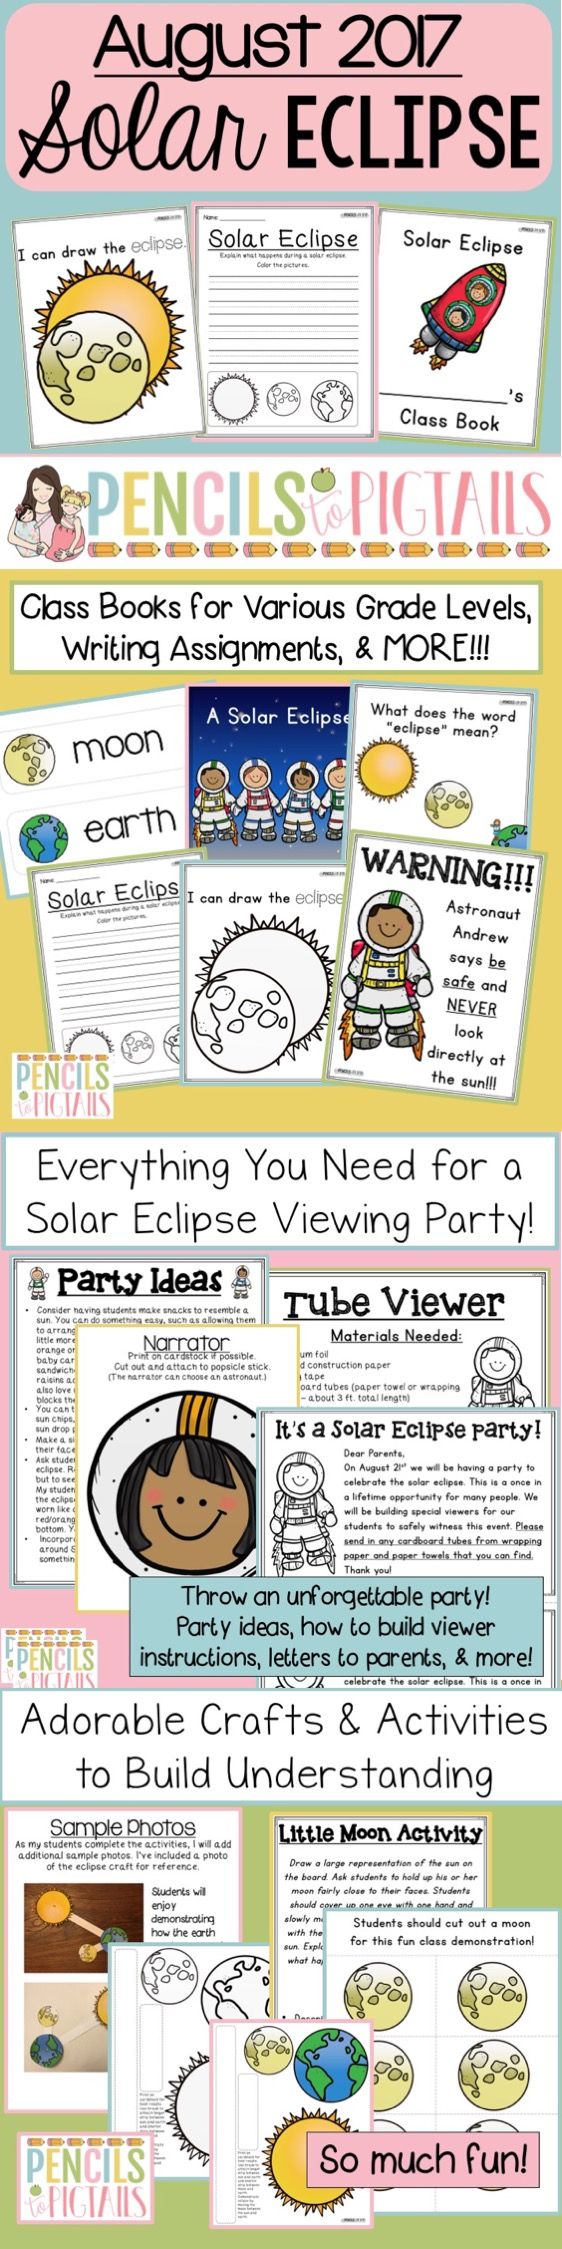 diy eclipse viewer instructions